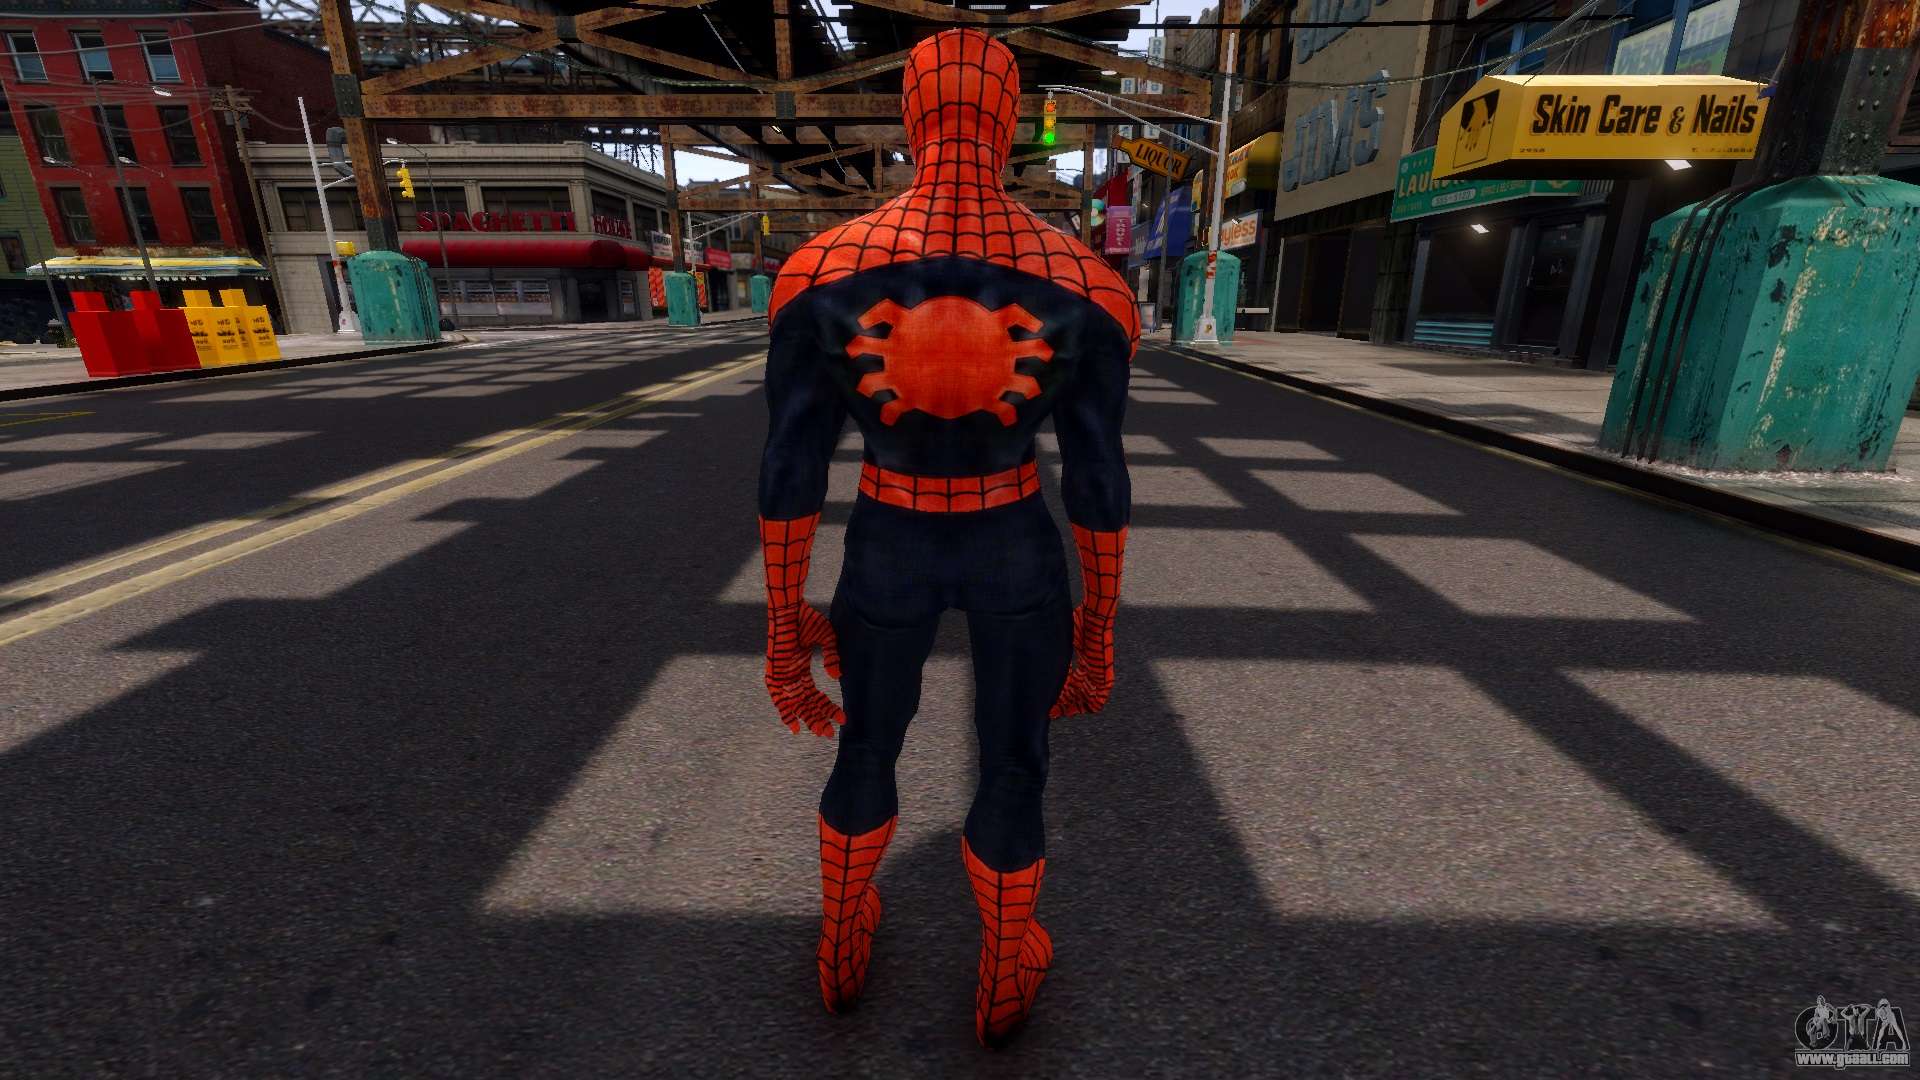 Spiderman Web of Shadows for GTA 4